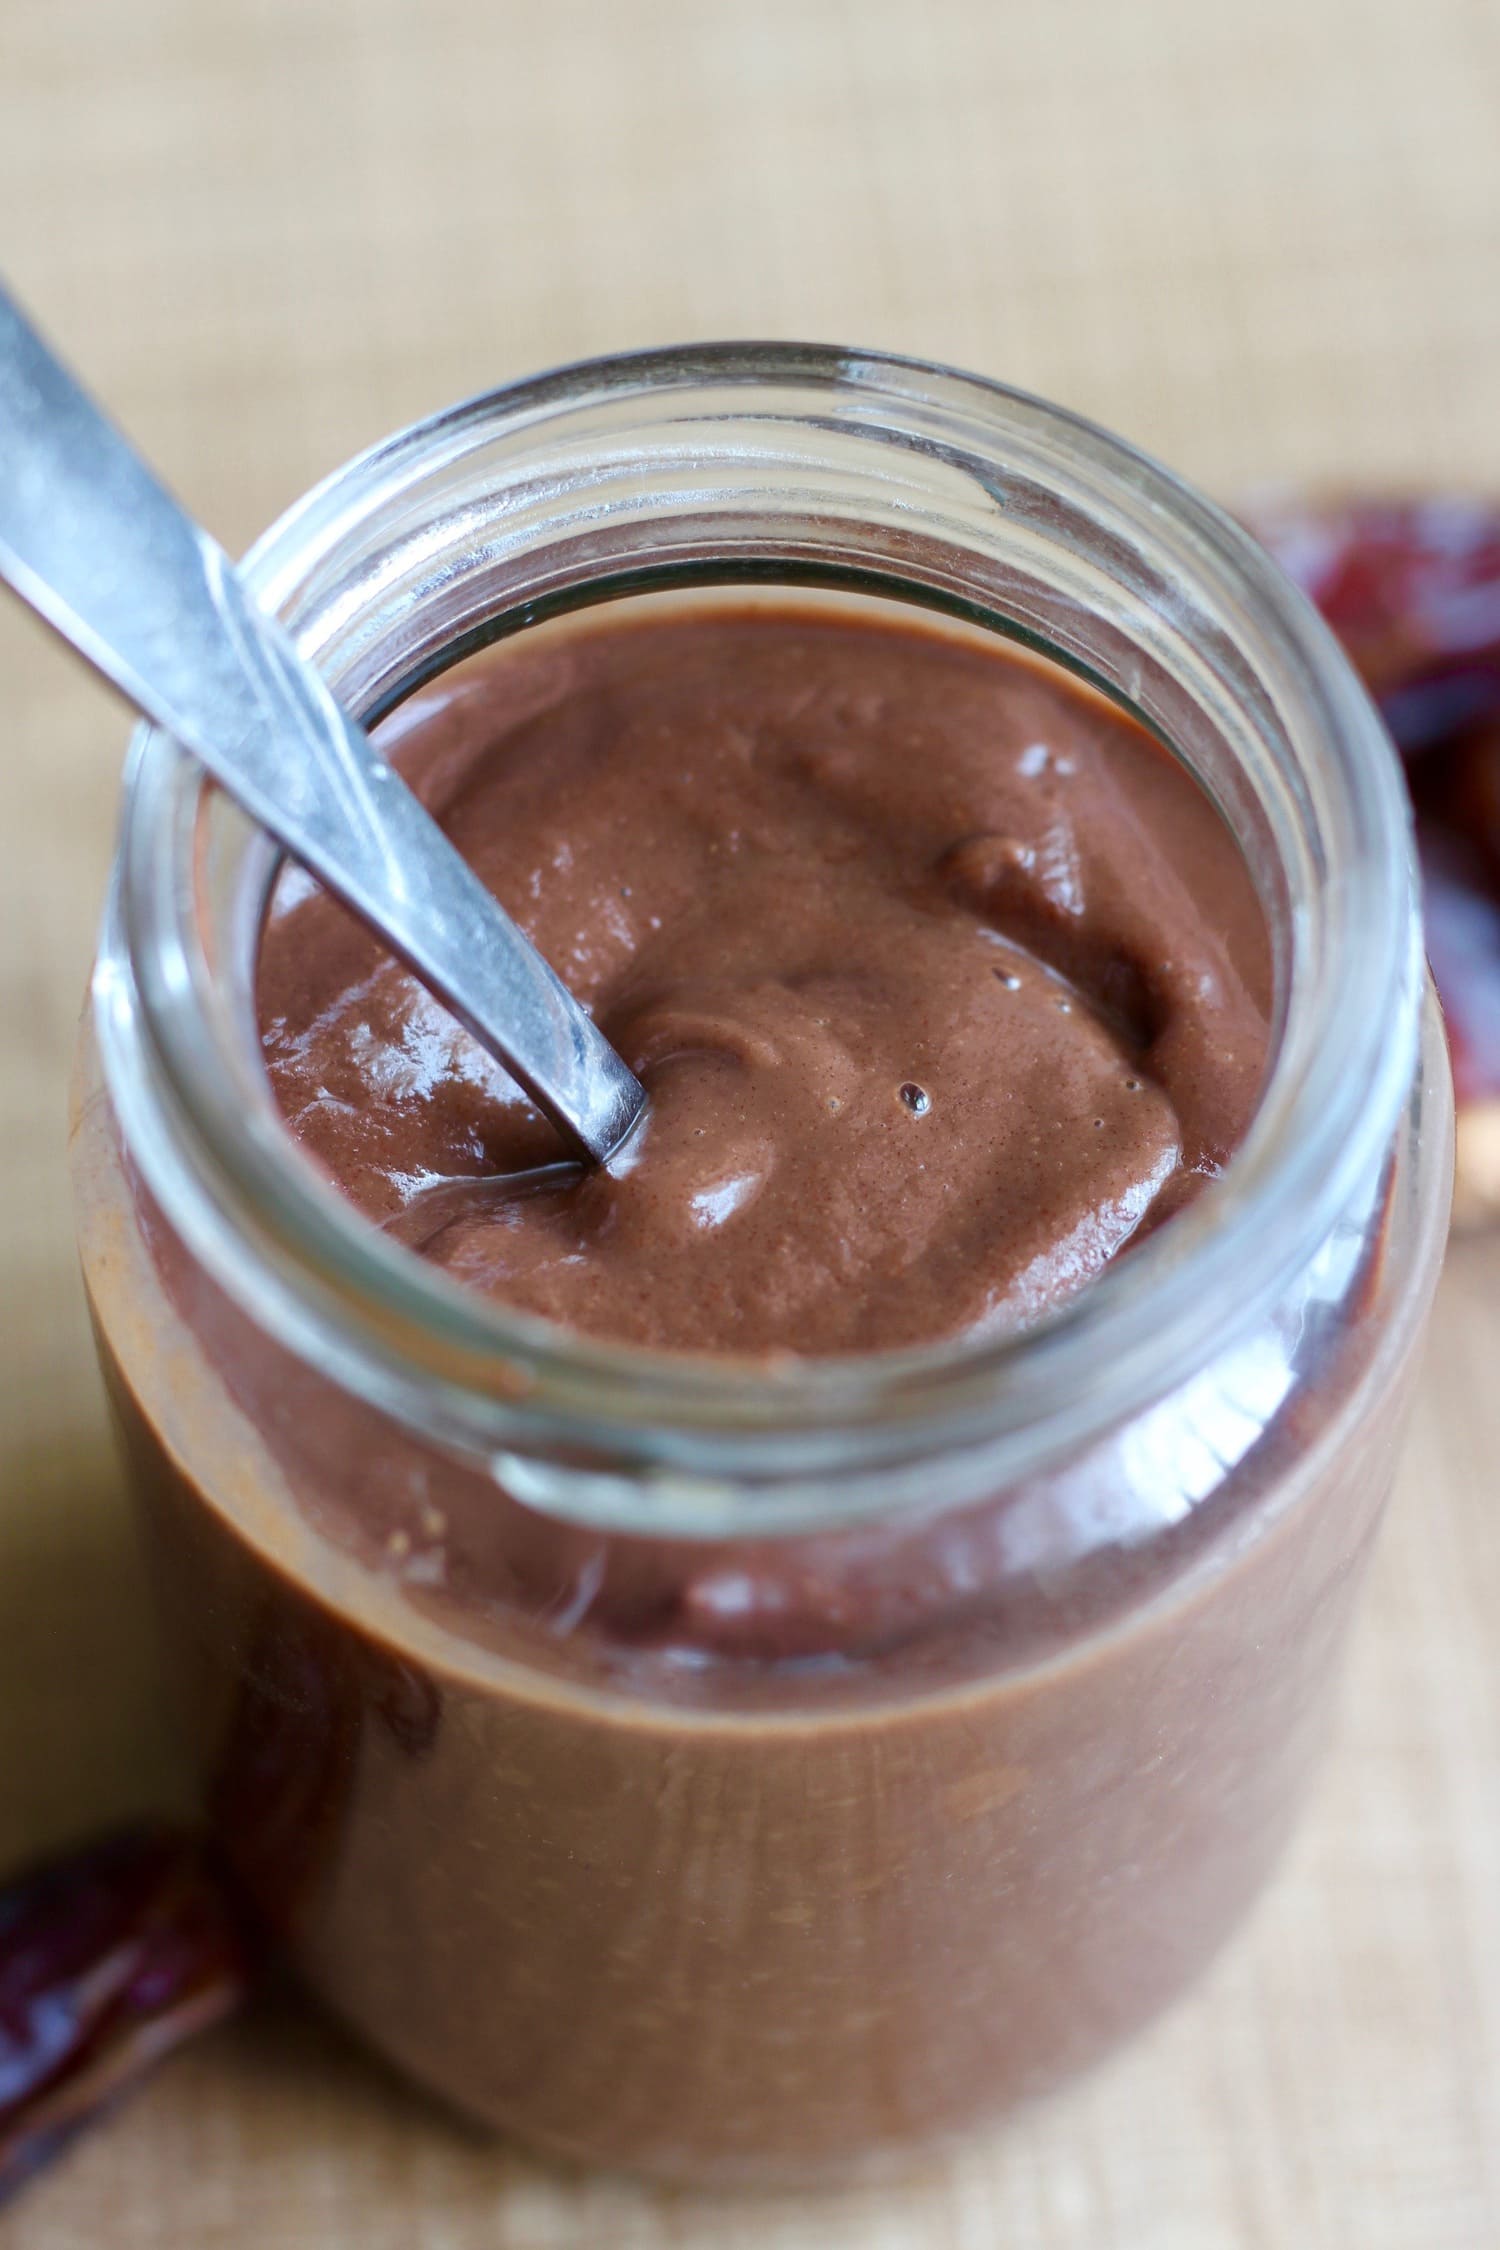 Date sweetened chocolate sauce in a jar